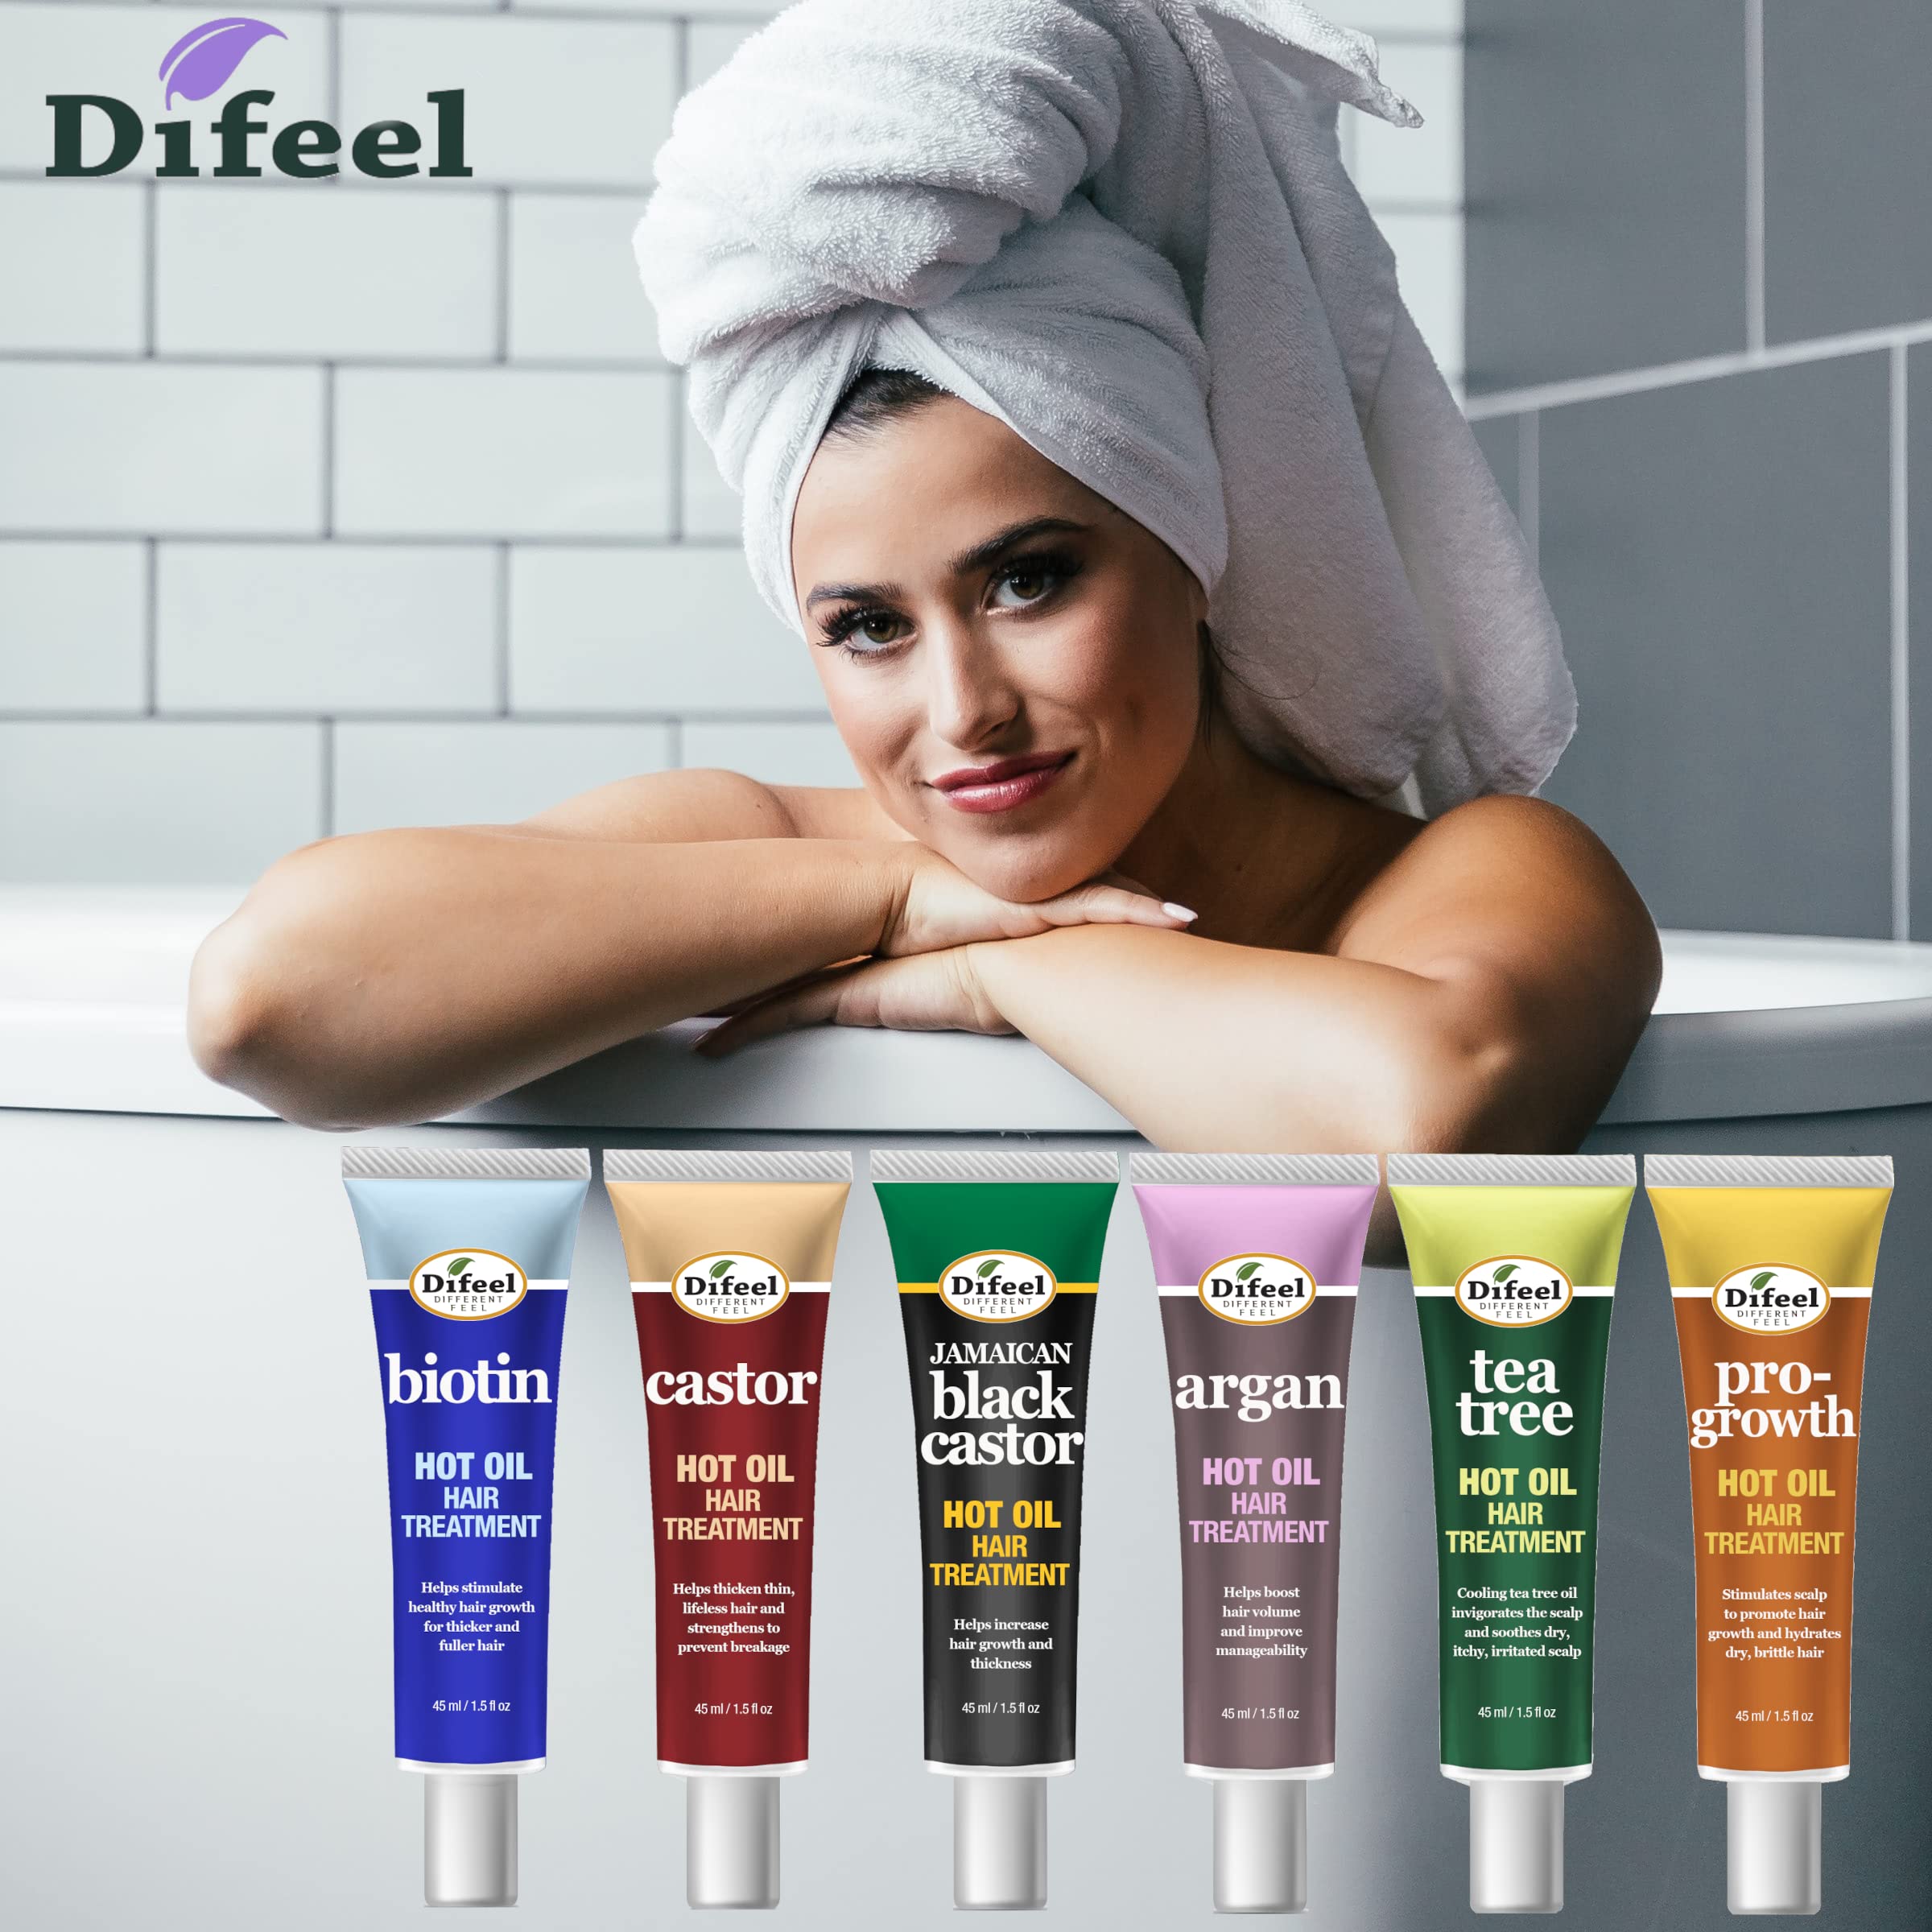 Difeel Hot Oil Hair Treatment with Biotin 1.5 oz. (Pack of 2) - Biotin Hot Oil Treatment